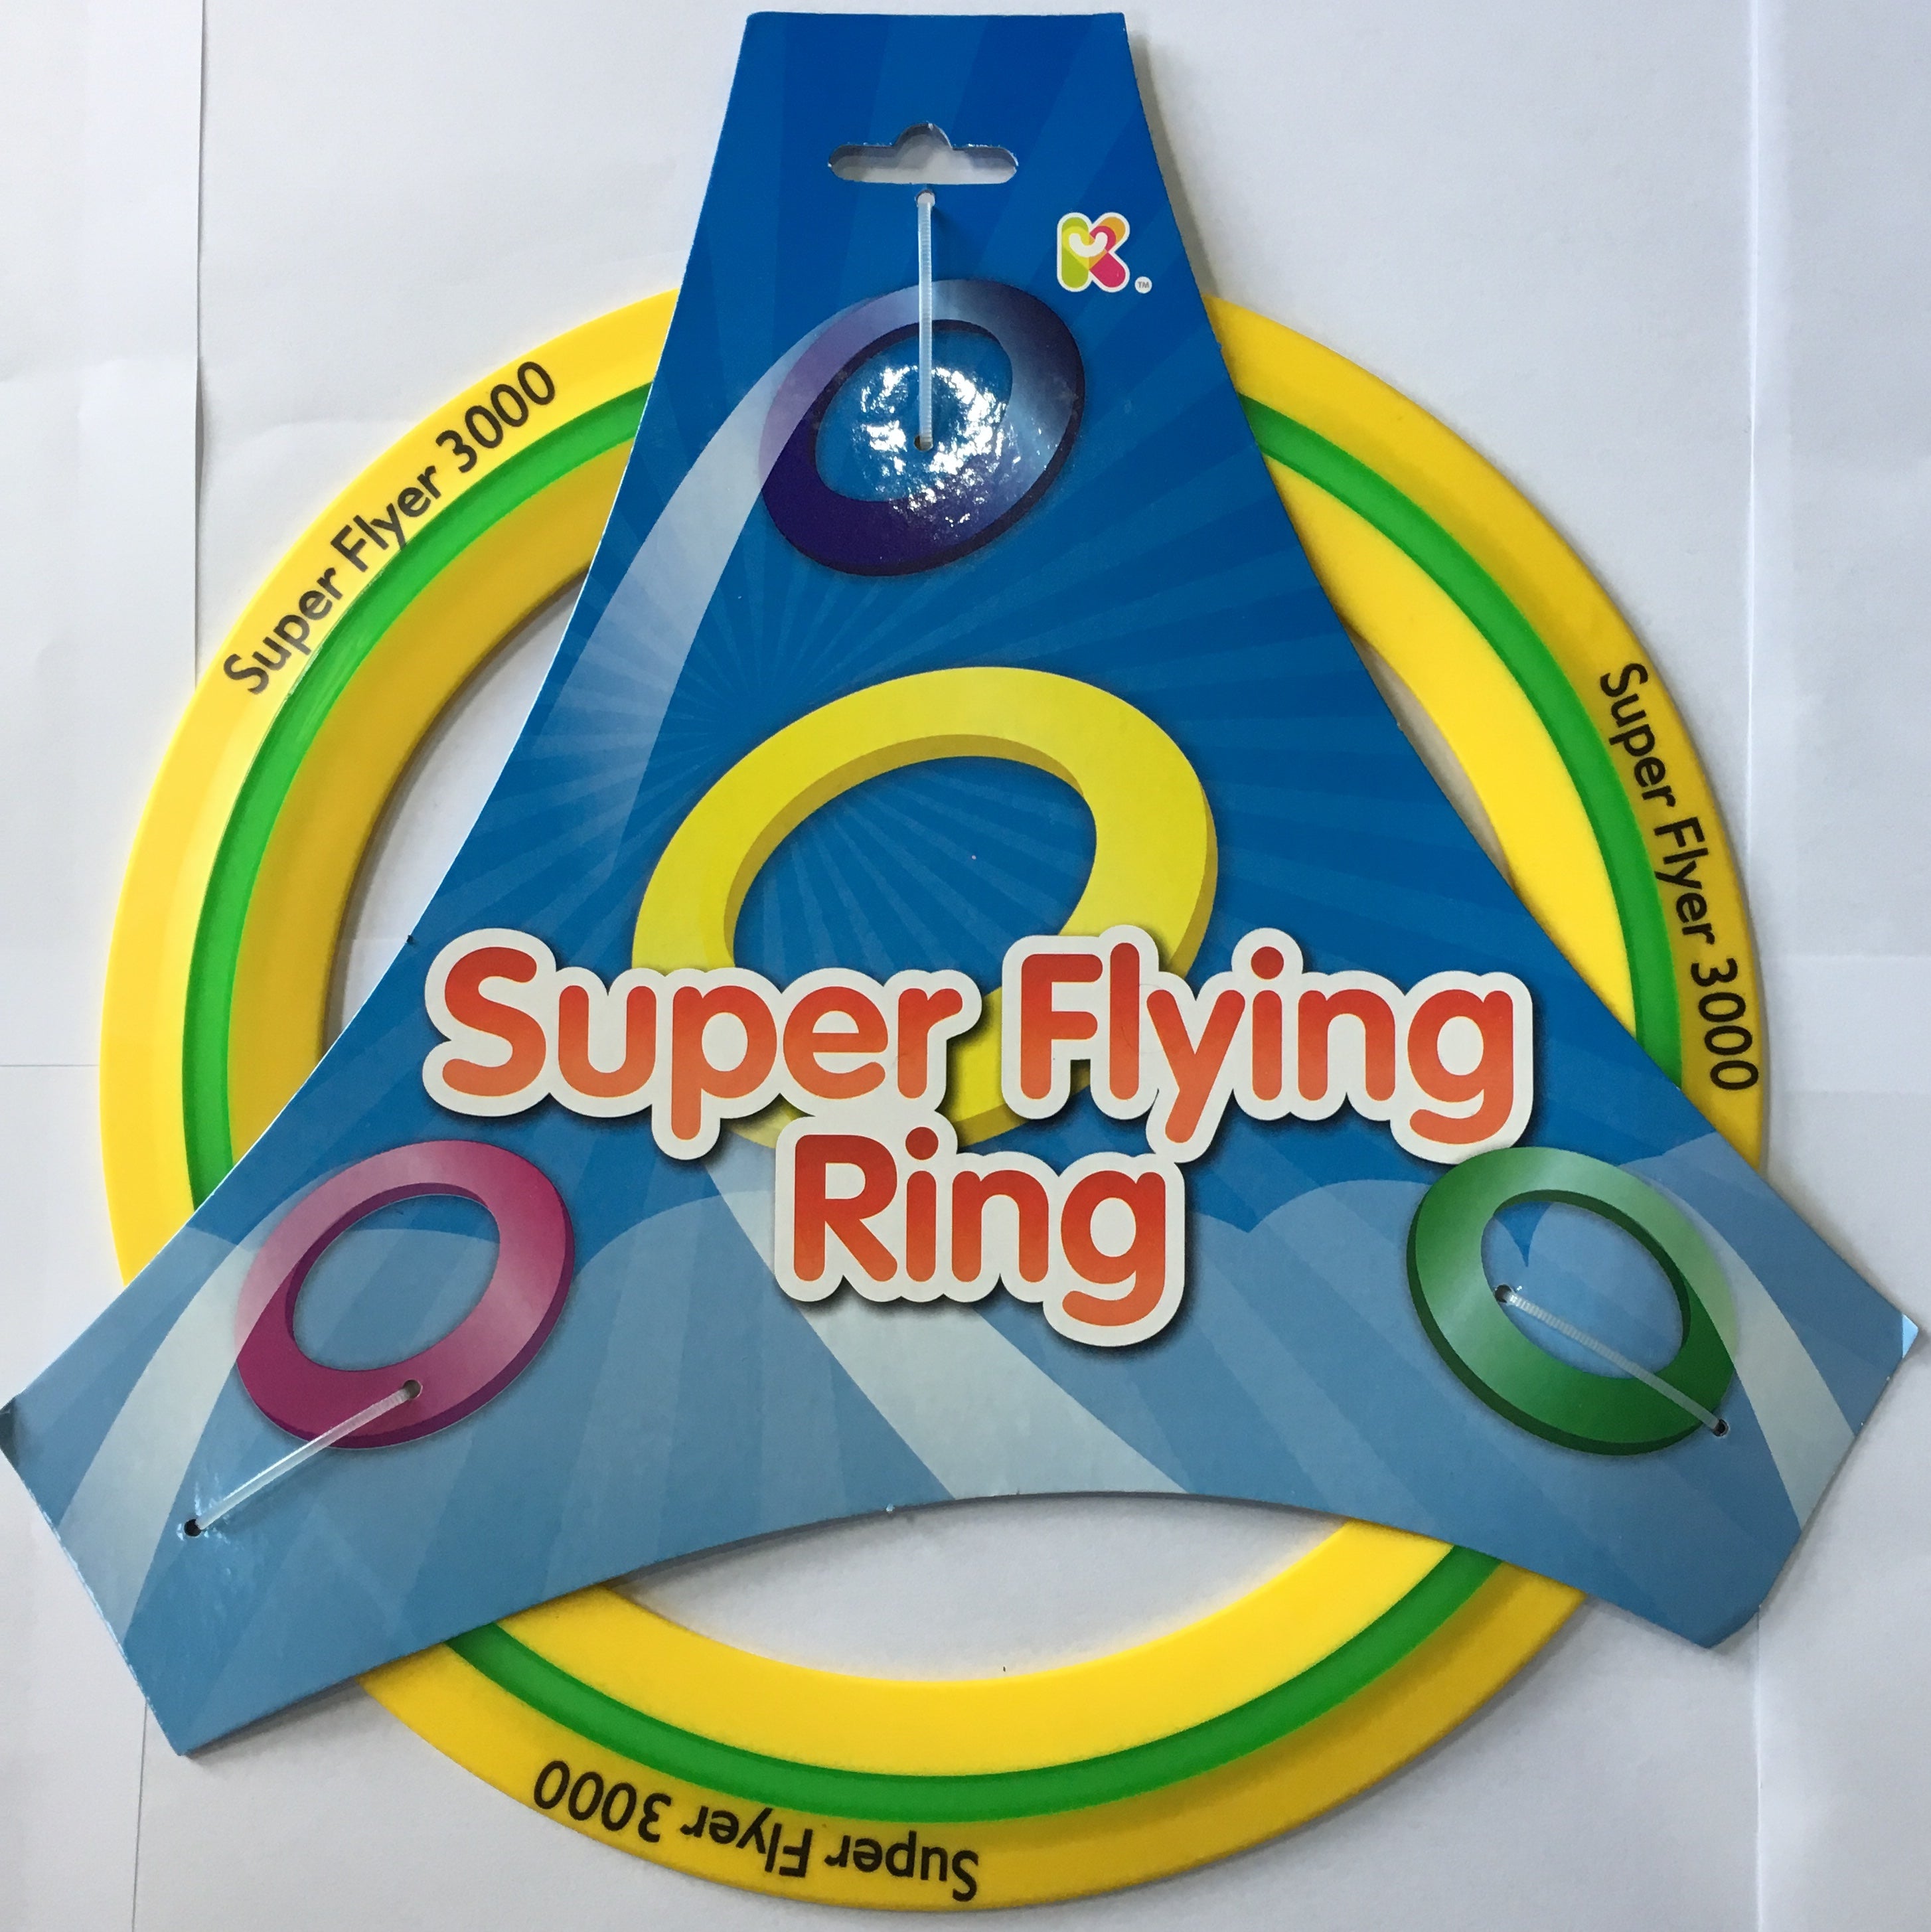 Super Flying Ring